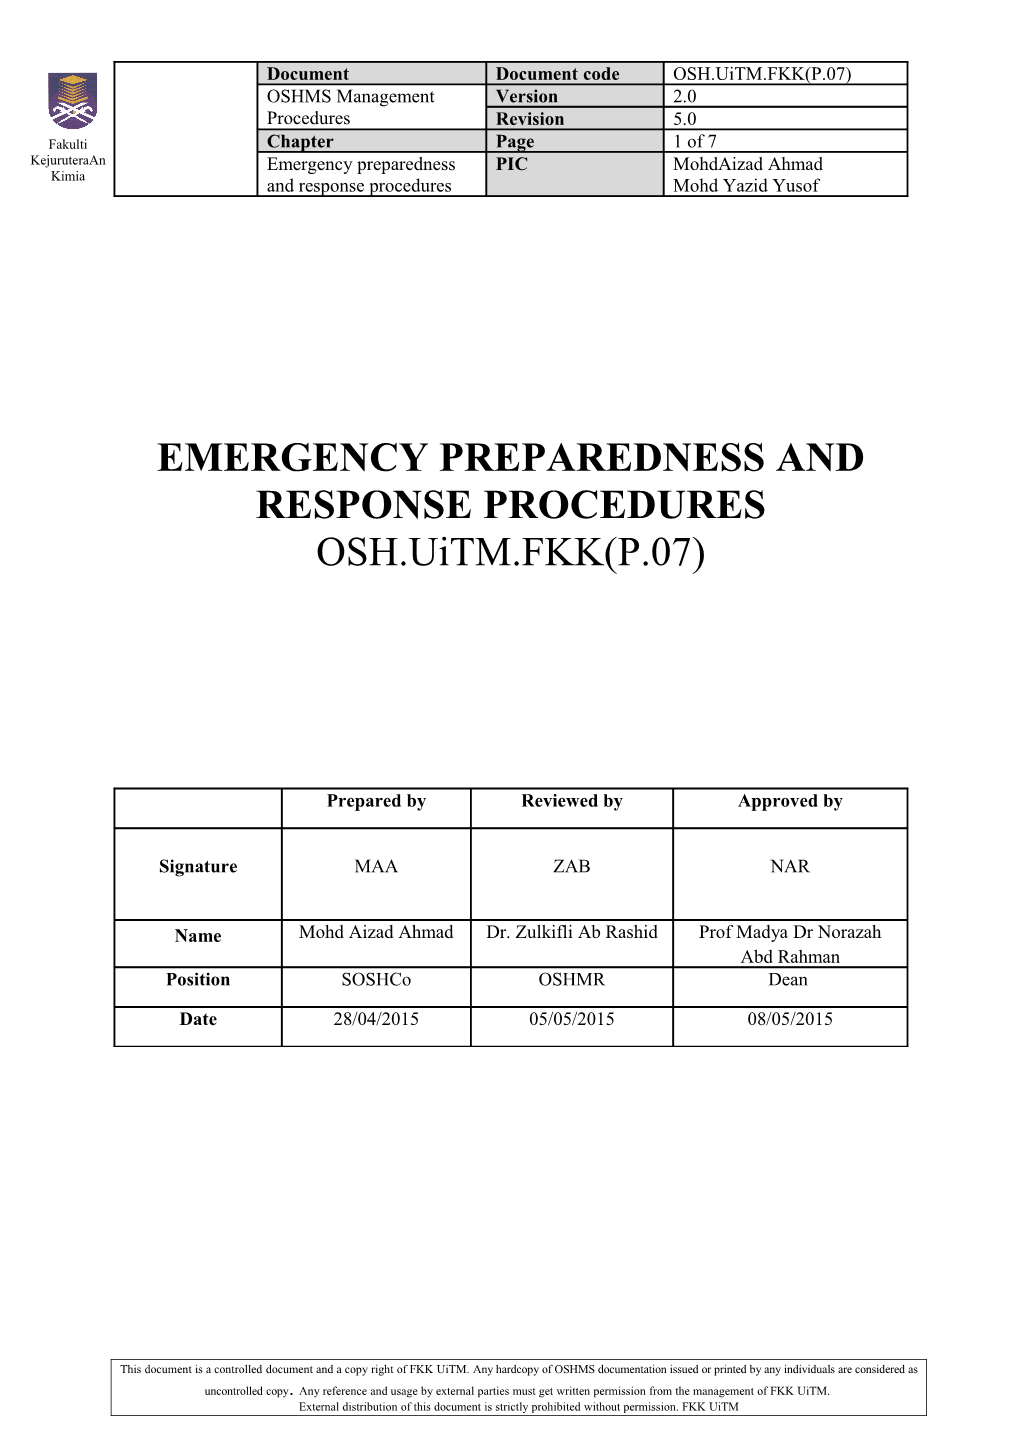 Emergency Preparedness and Response Procedures